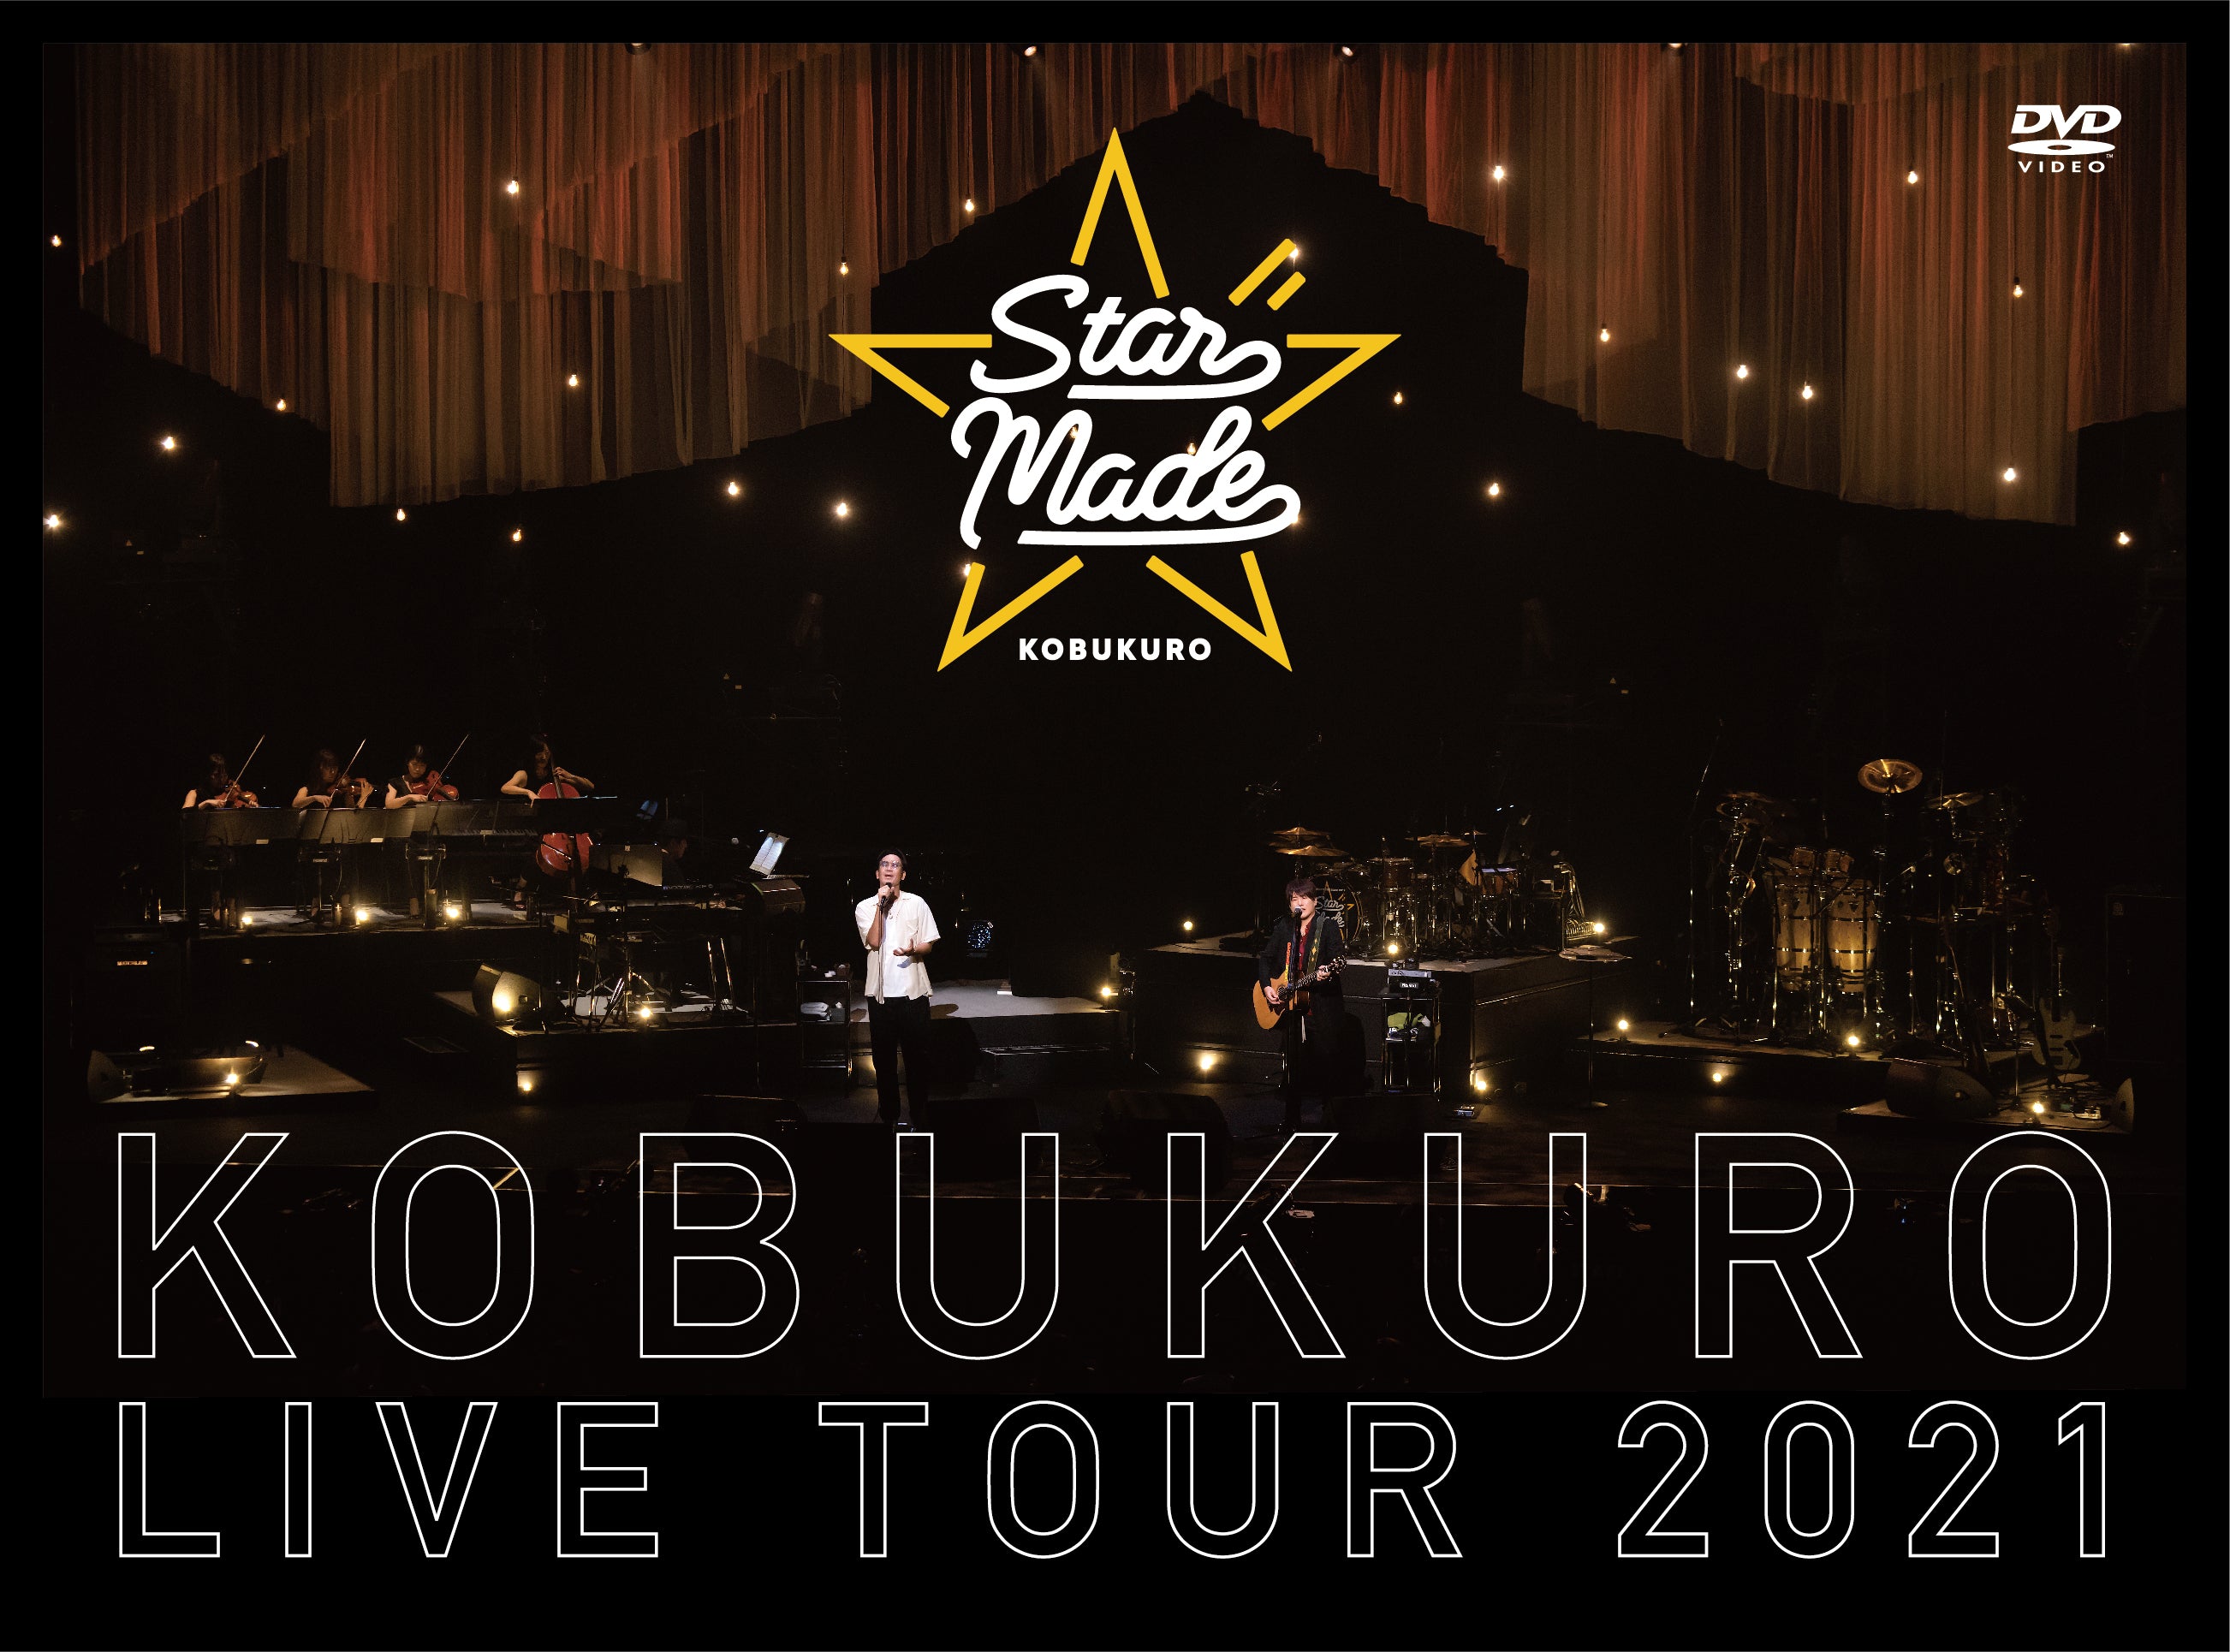 【TEAM KOBUKURO】KOBUKURO LIVE TOUR 2021 ”Star Made” at 東京ガーデンシアター〈ファンサイト会員限定盤〉 DVD